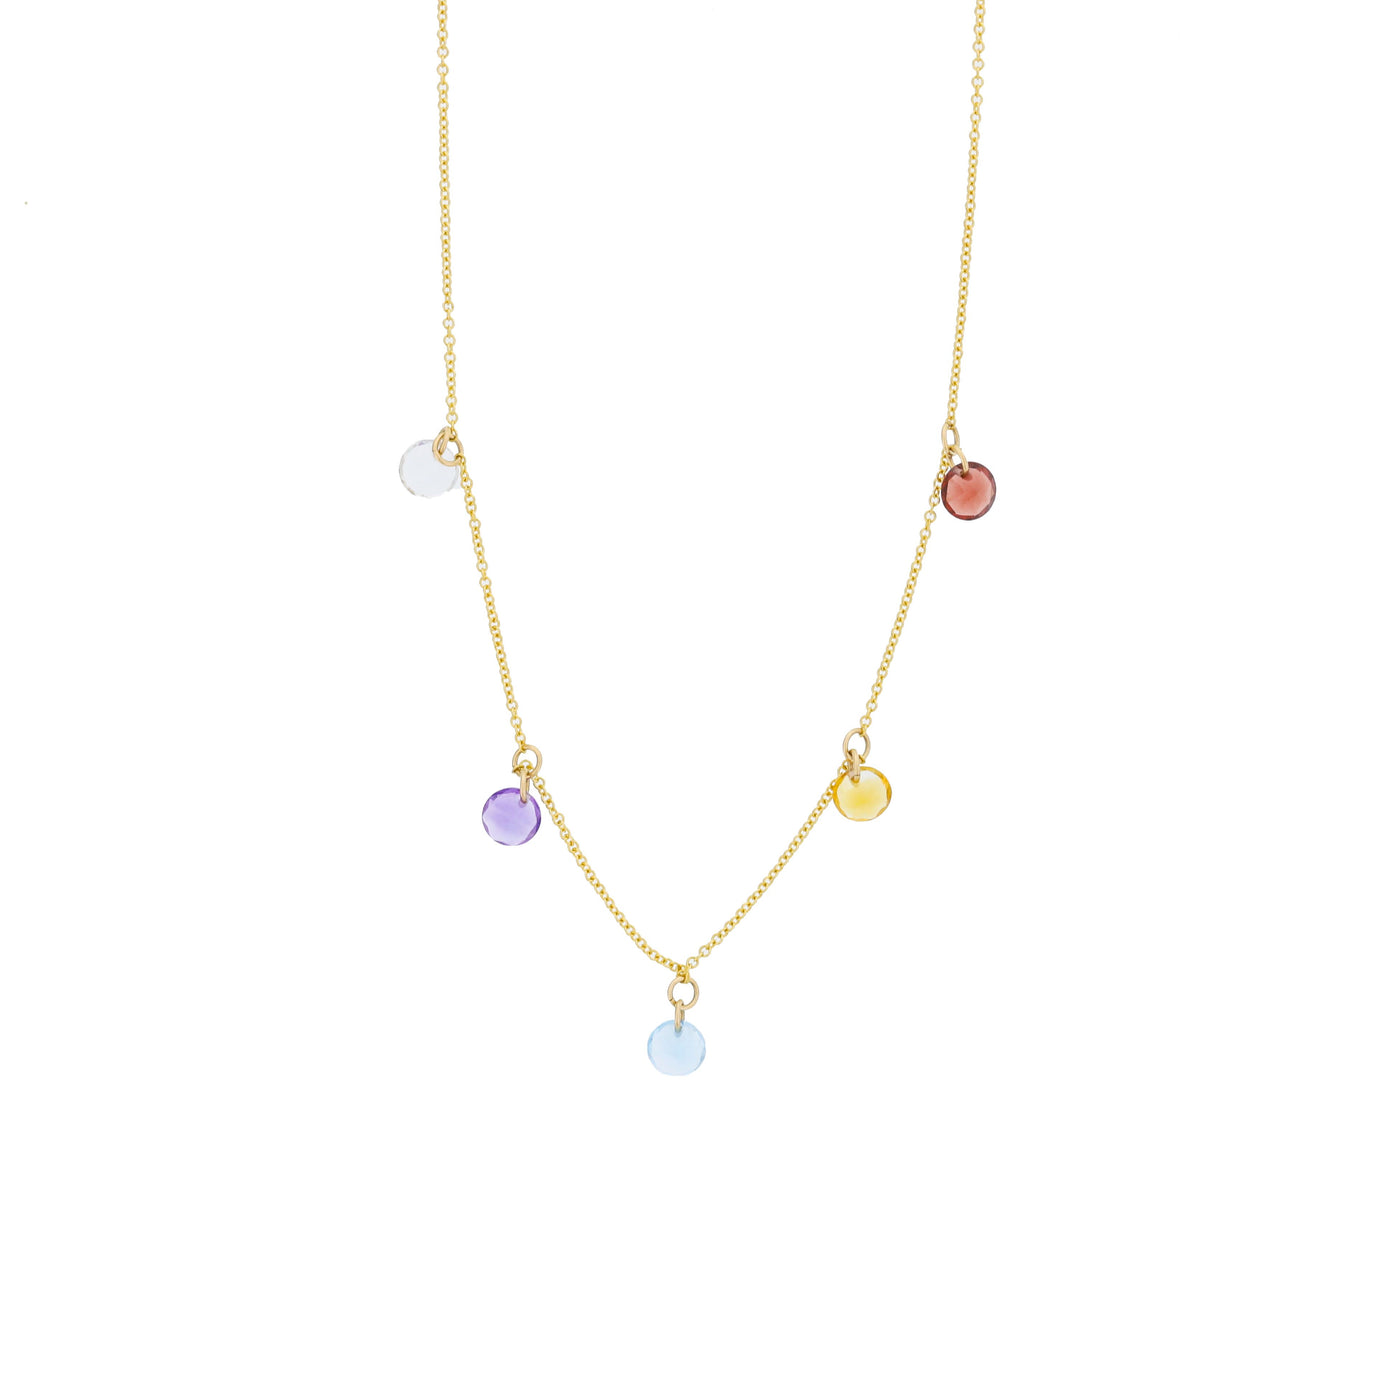 Dee Berkley Jewelry Family Circle Birthstone Necklace in 14KT